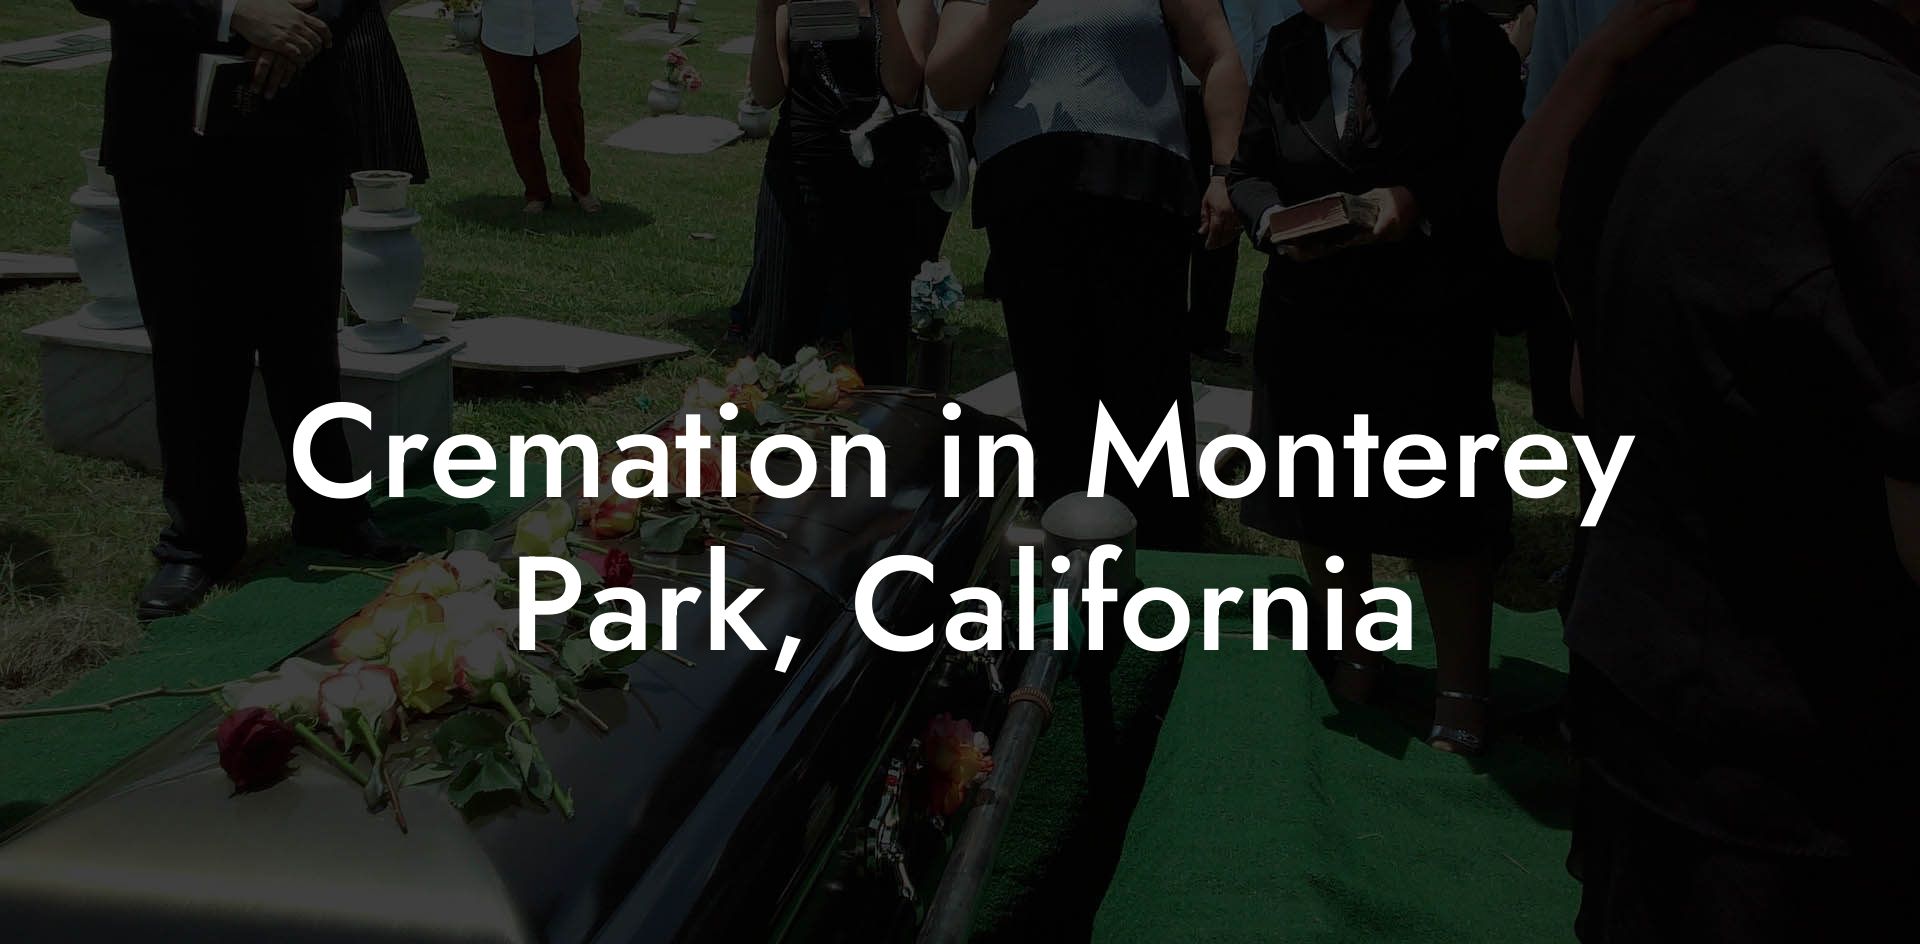 Cremation in Monterey Park, California